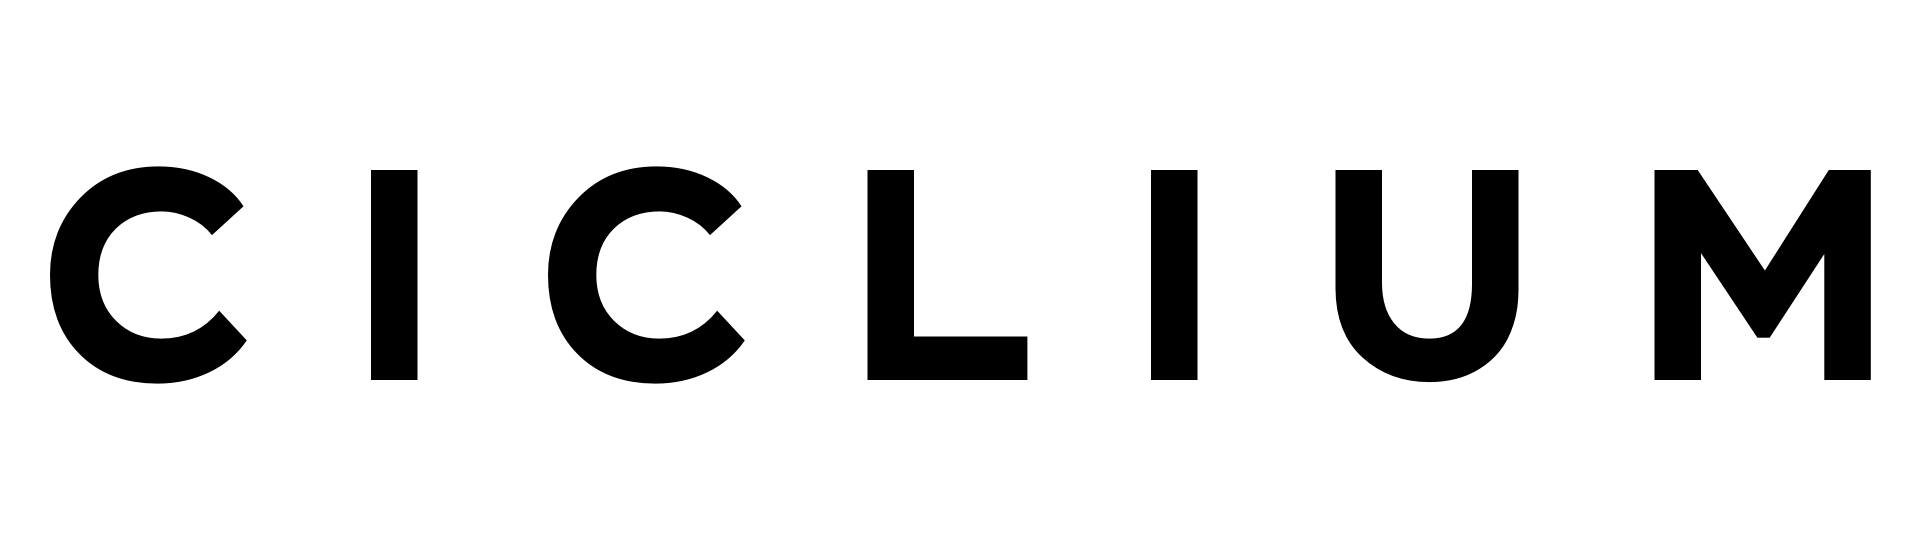 Logotipo principal Ciclium